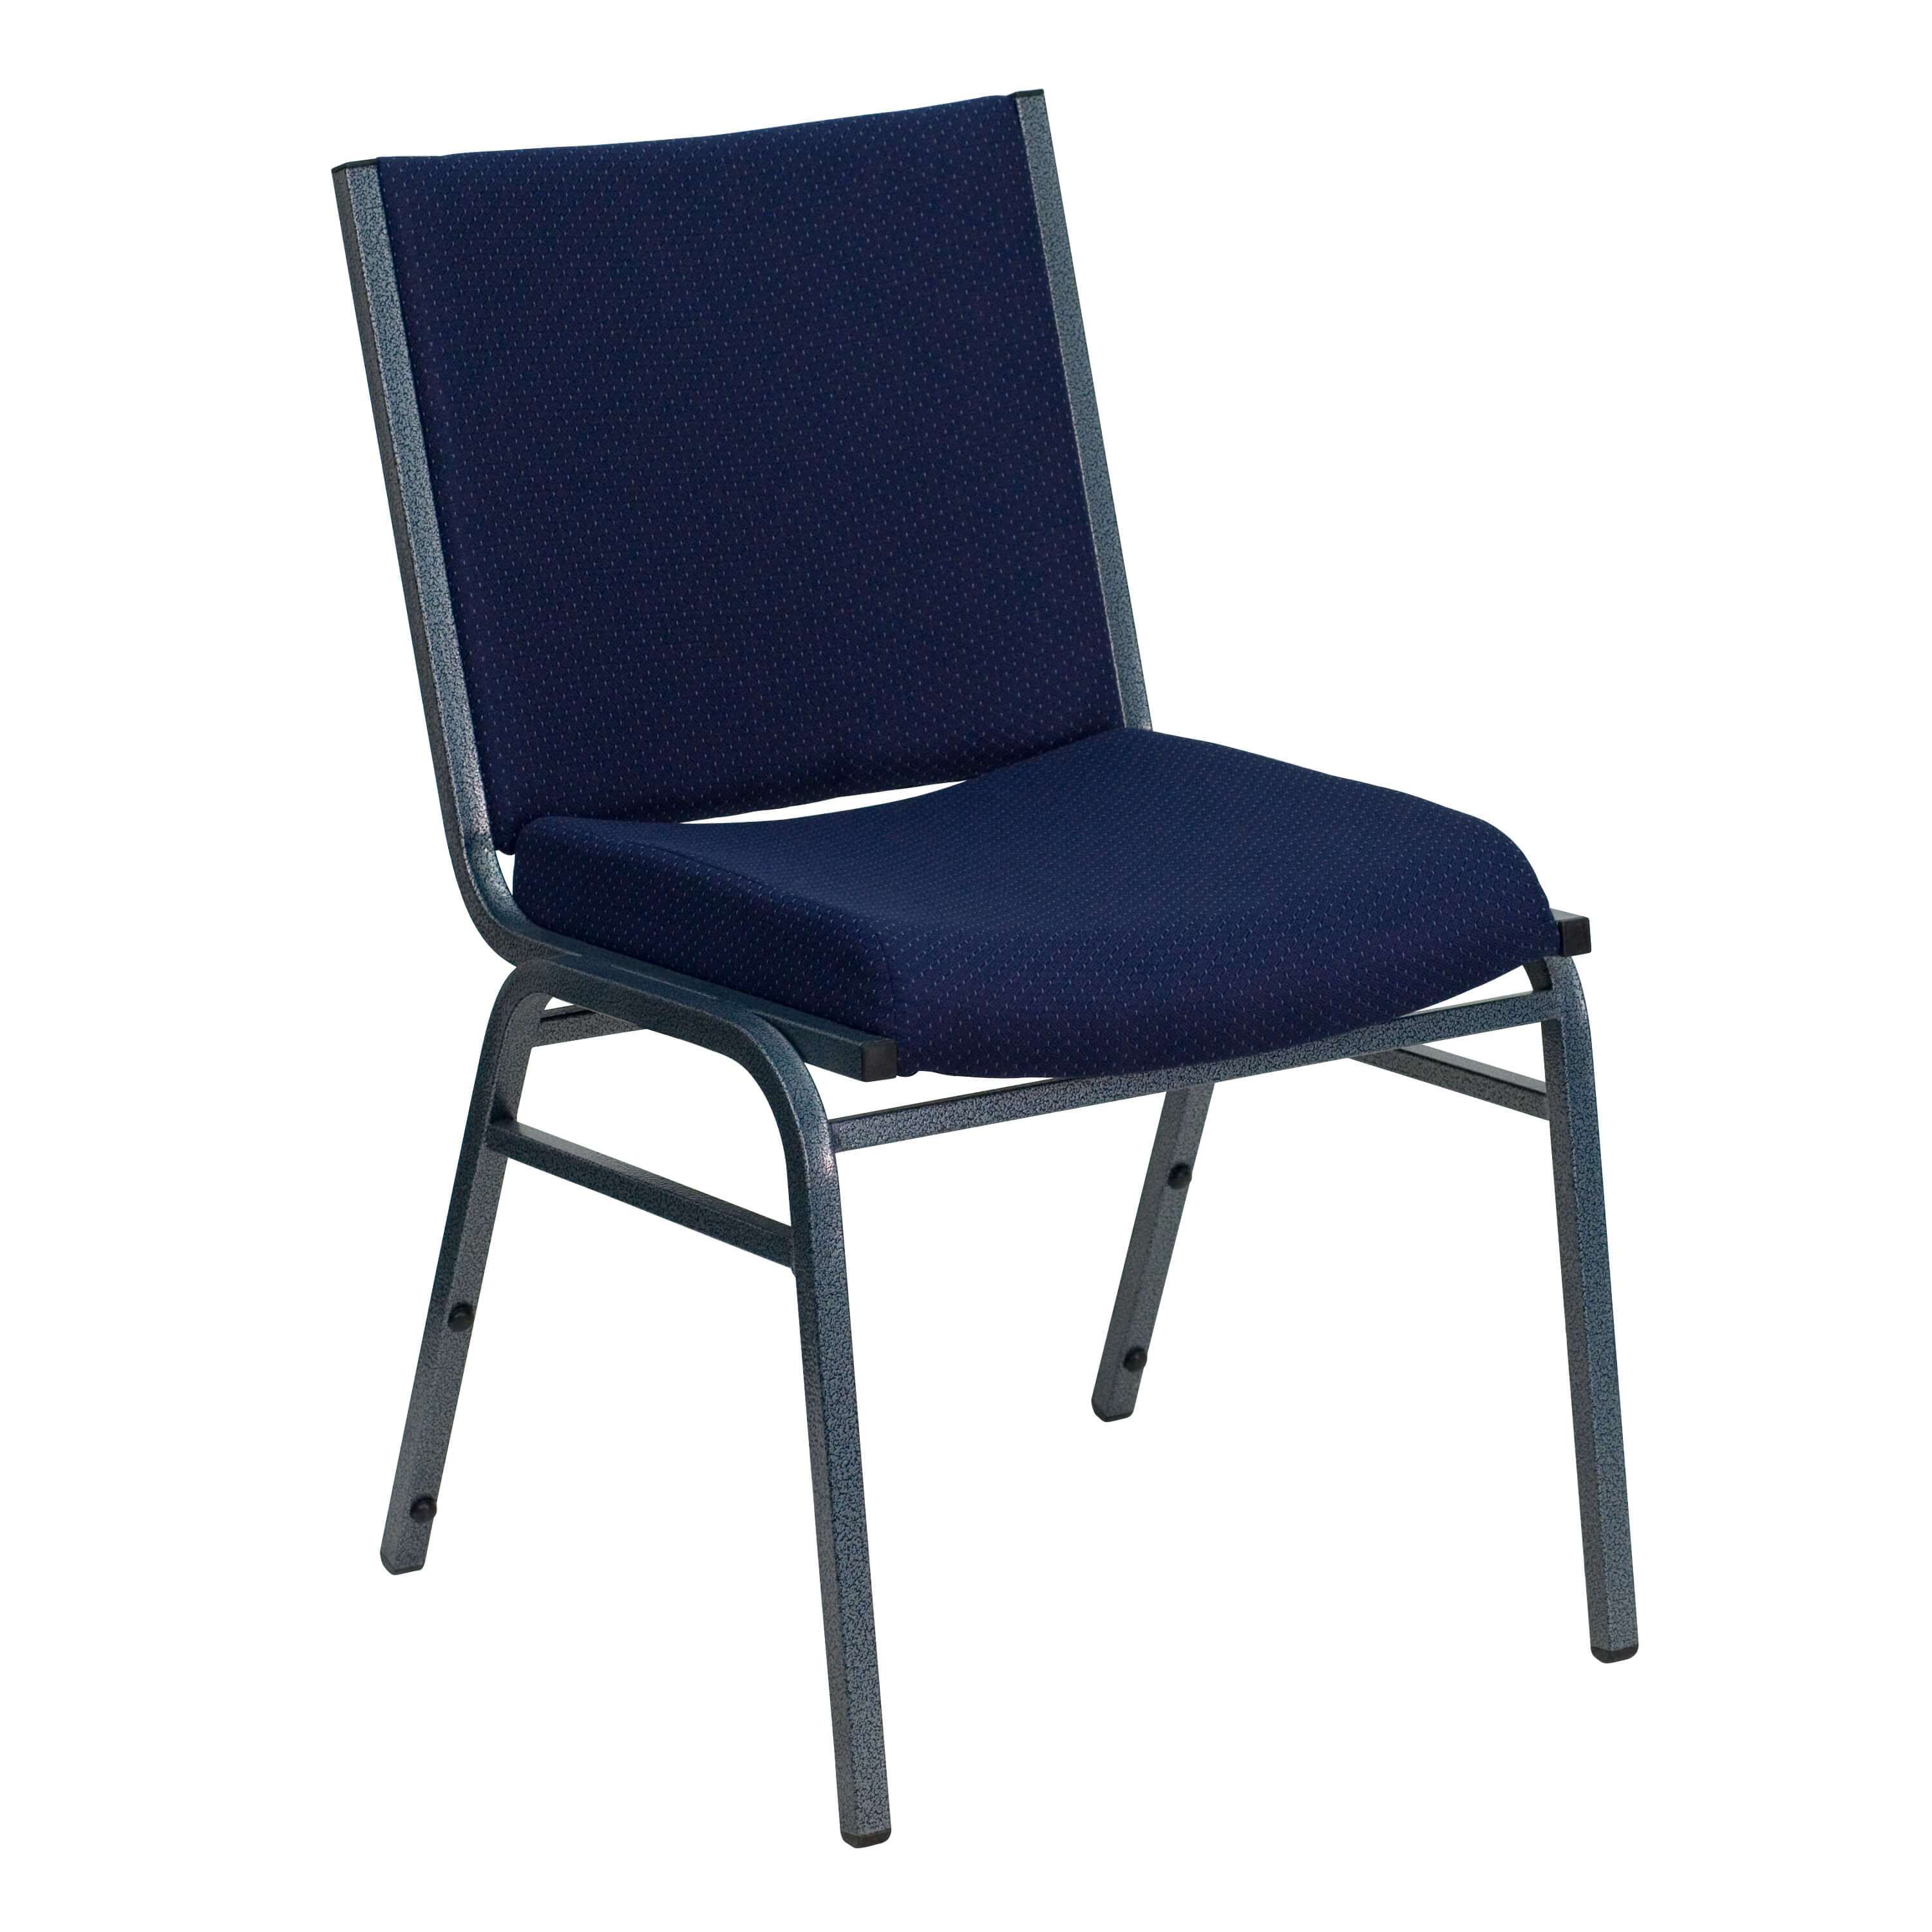 Stackable chairs CUB XU 60153 NVY GG FLA